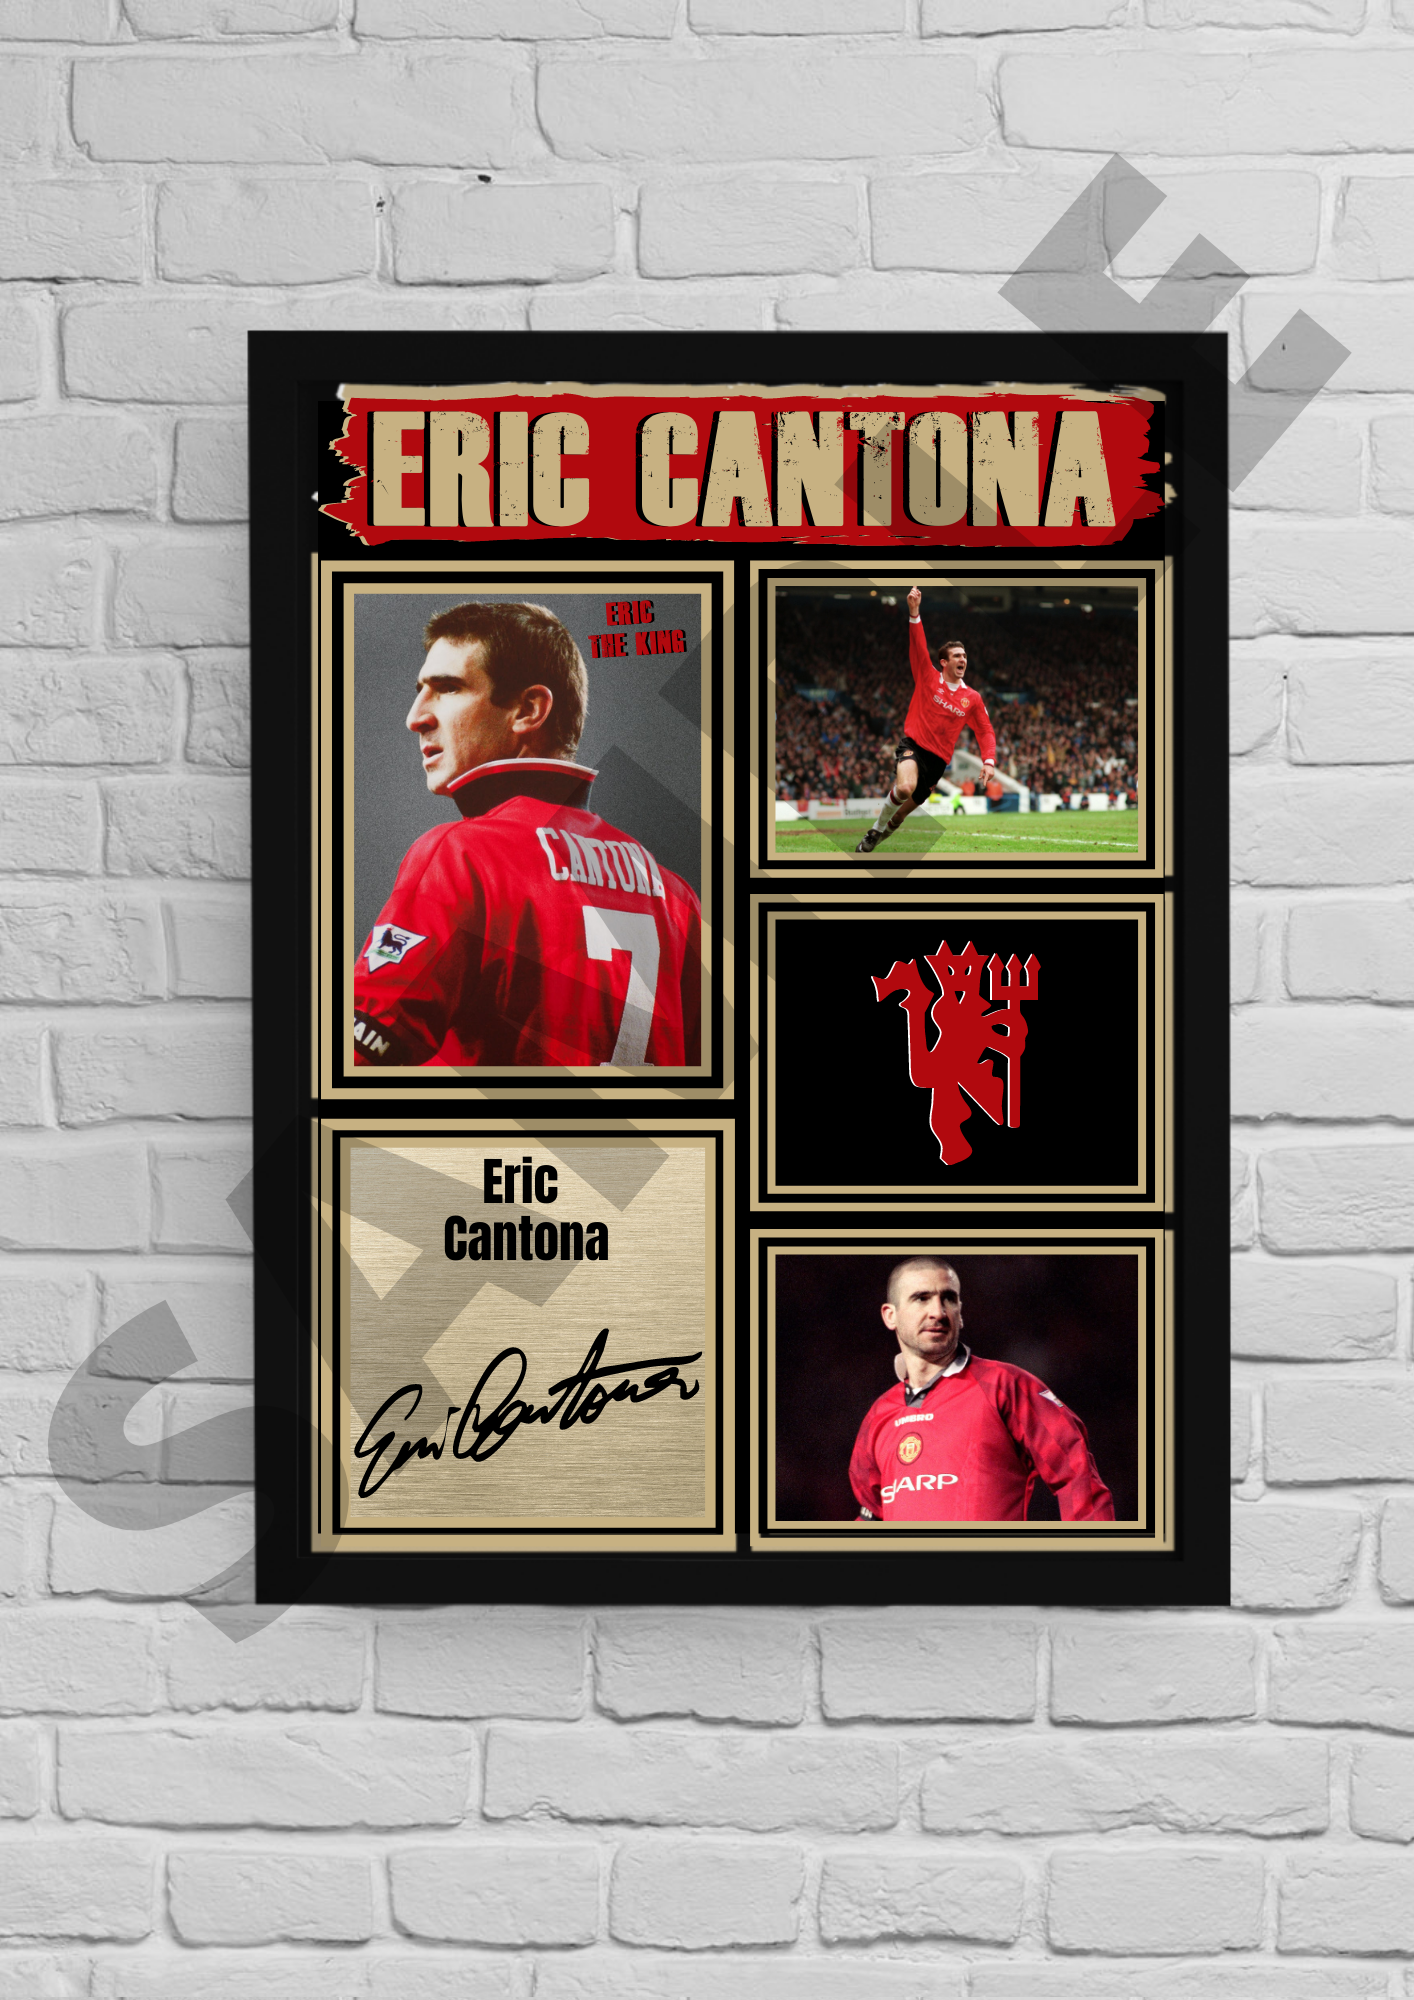 Exclusive Eric Cantona Manchester United Football collectable/memorabilia signed